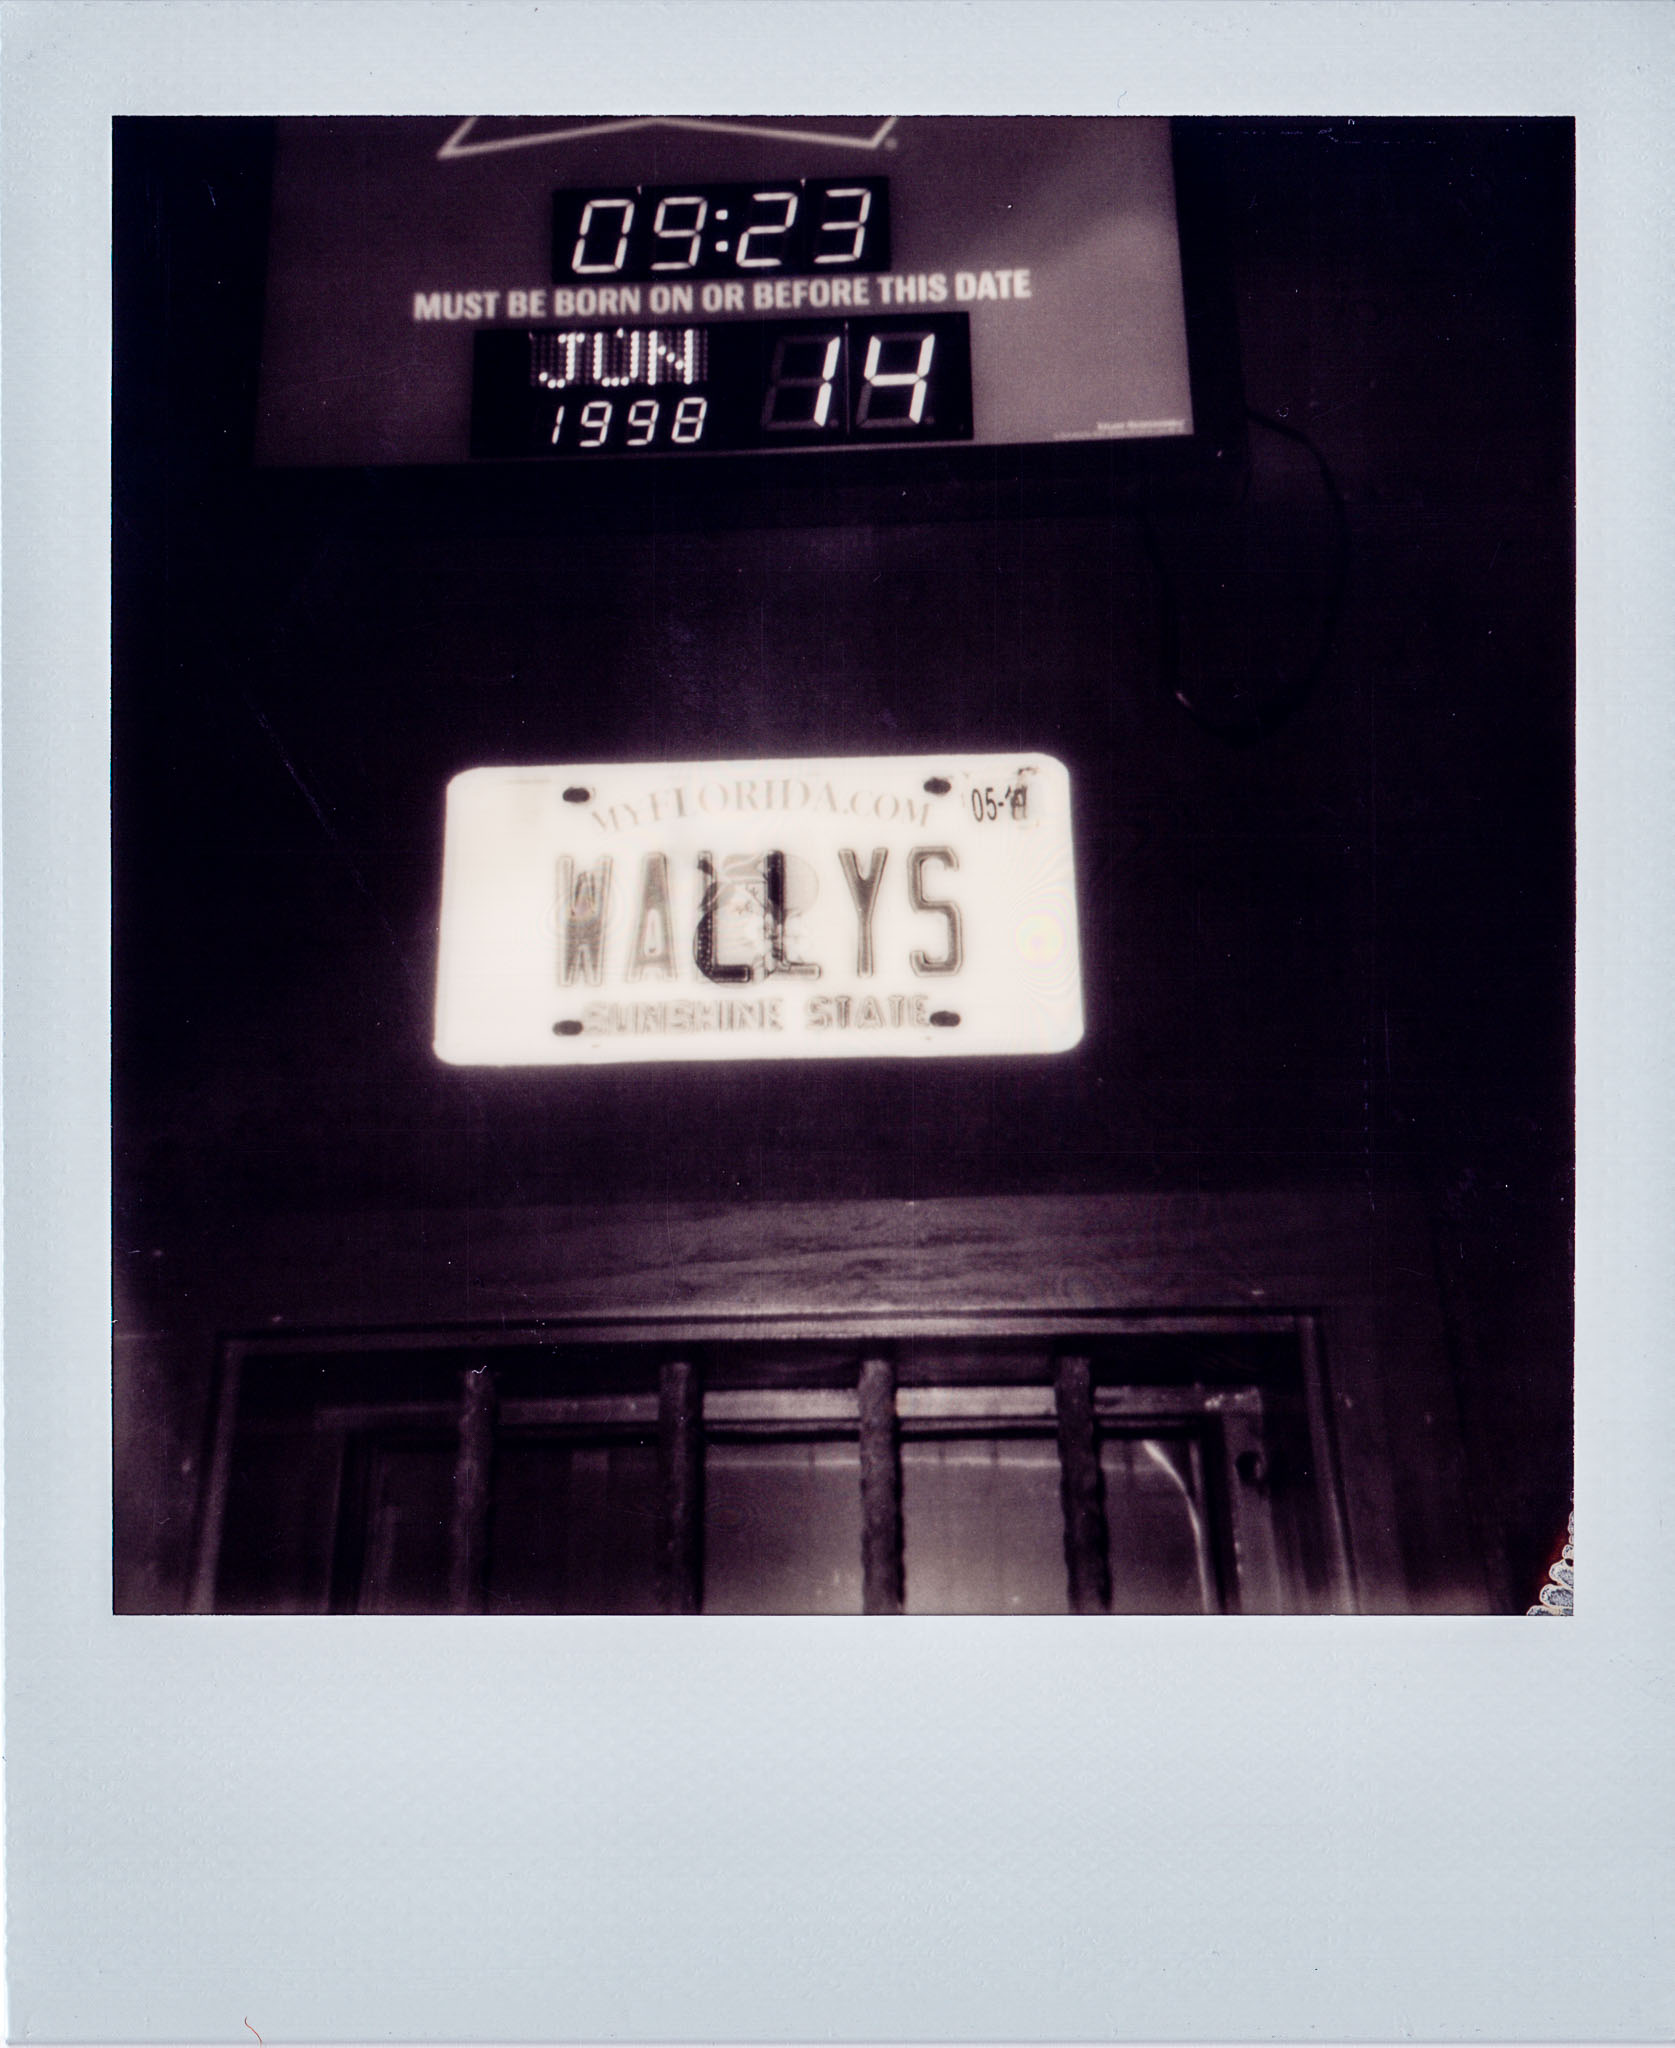 Wallys license hanging above the bar at Wallys Mills Avenue Liquors